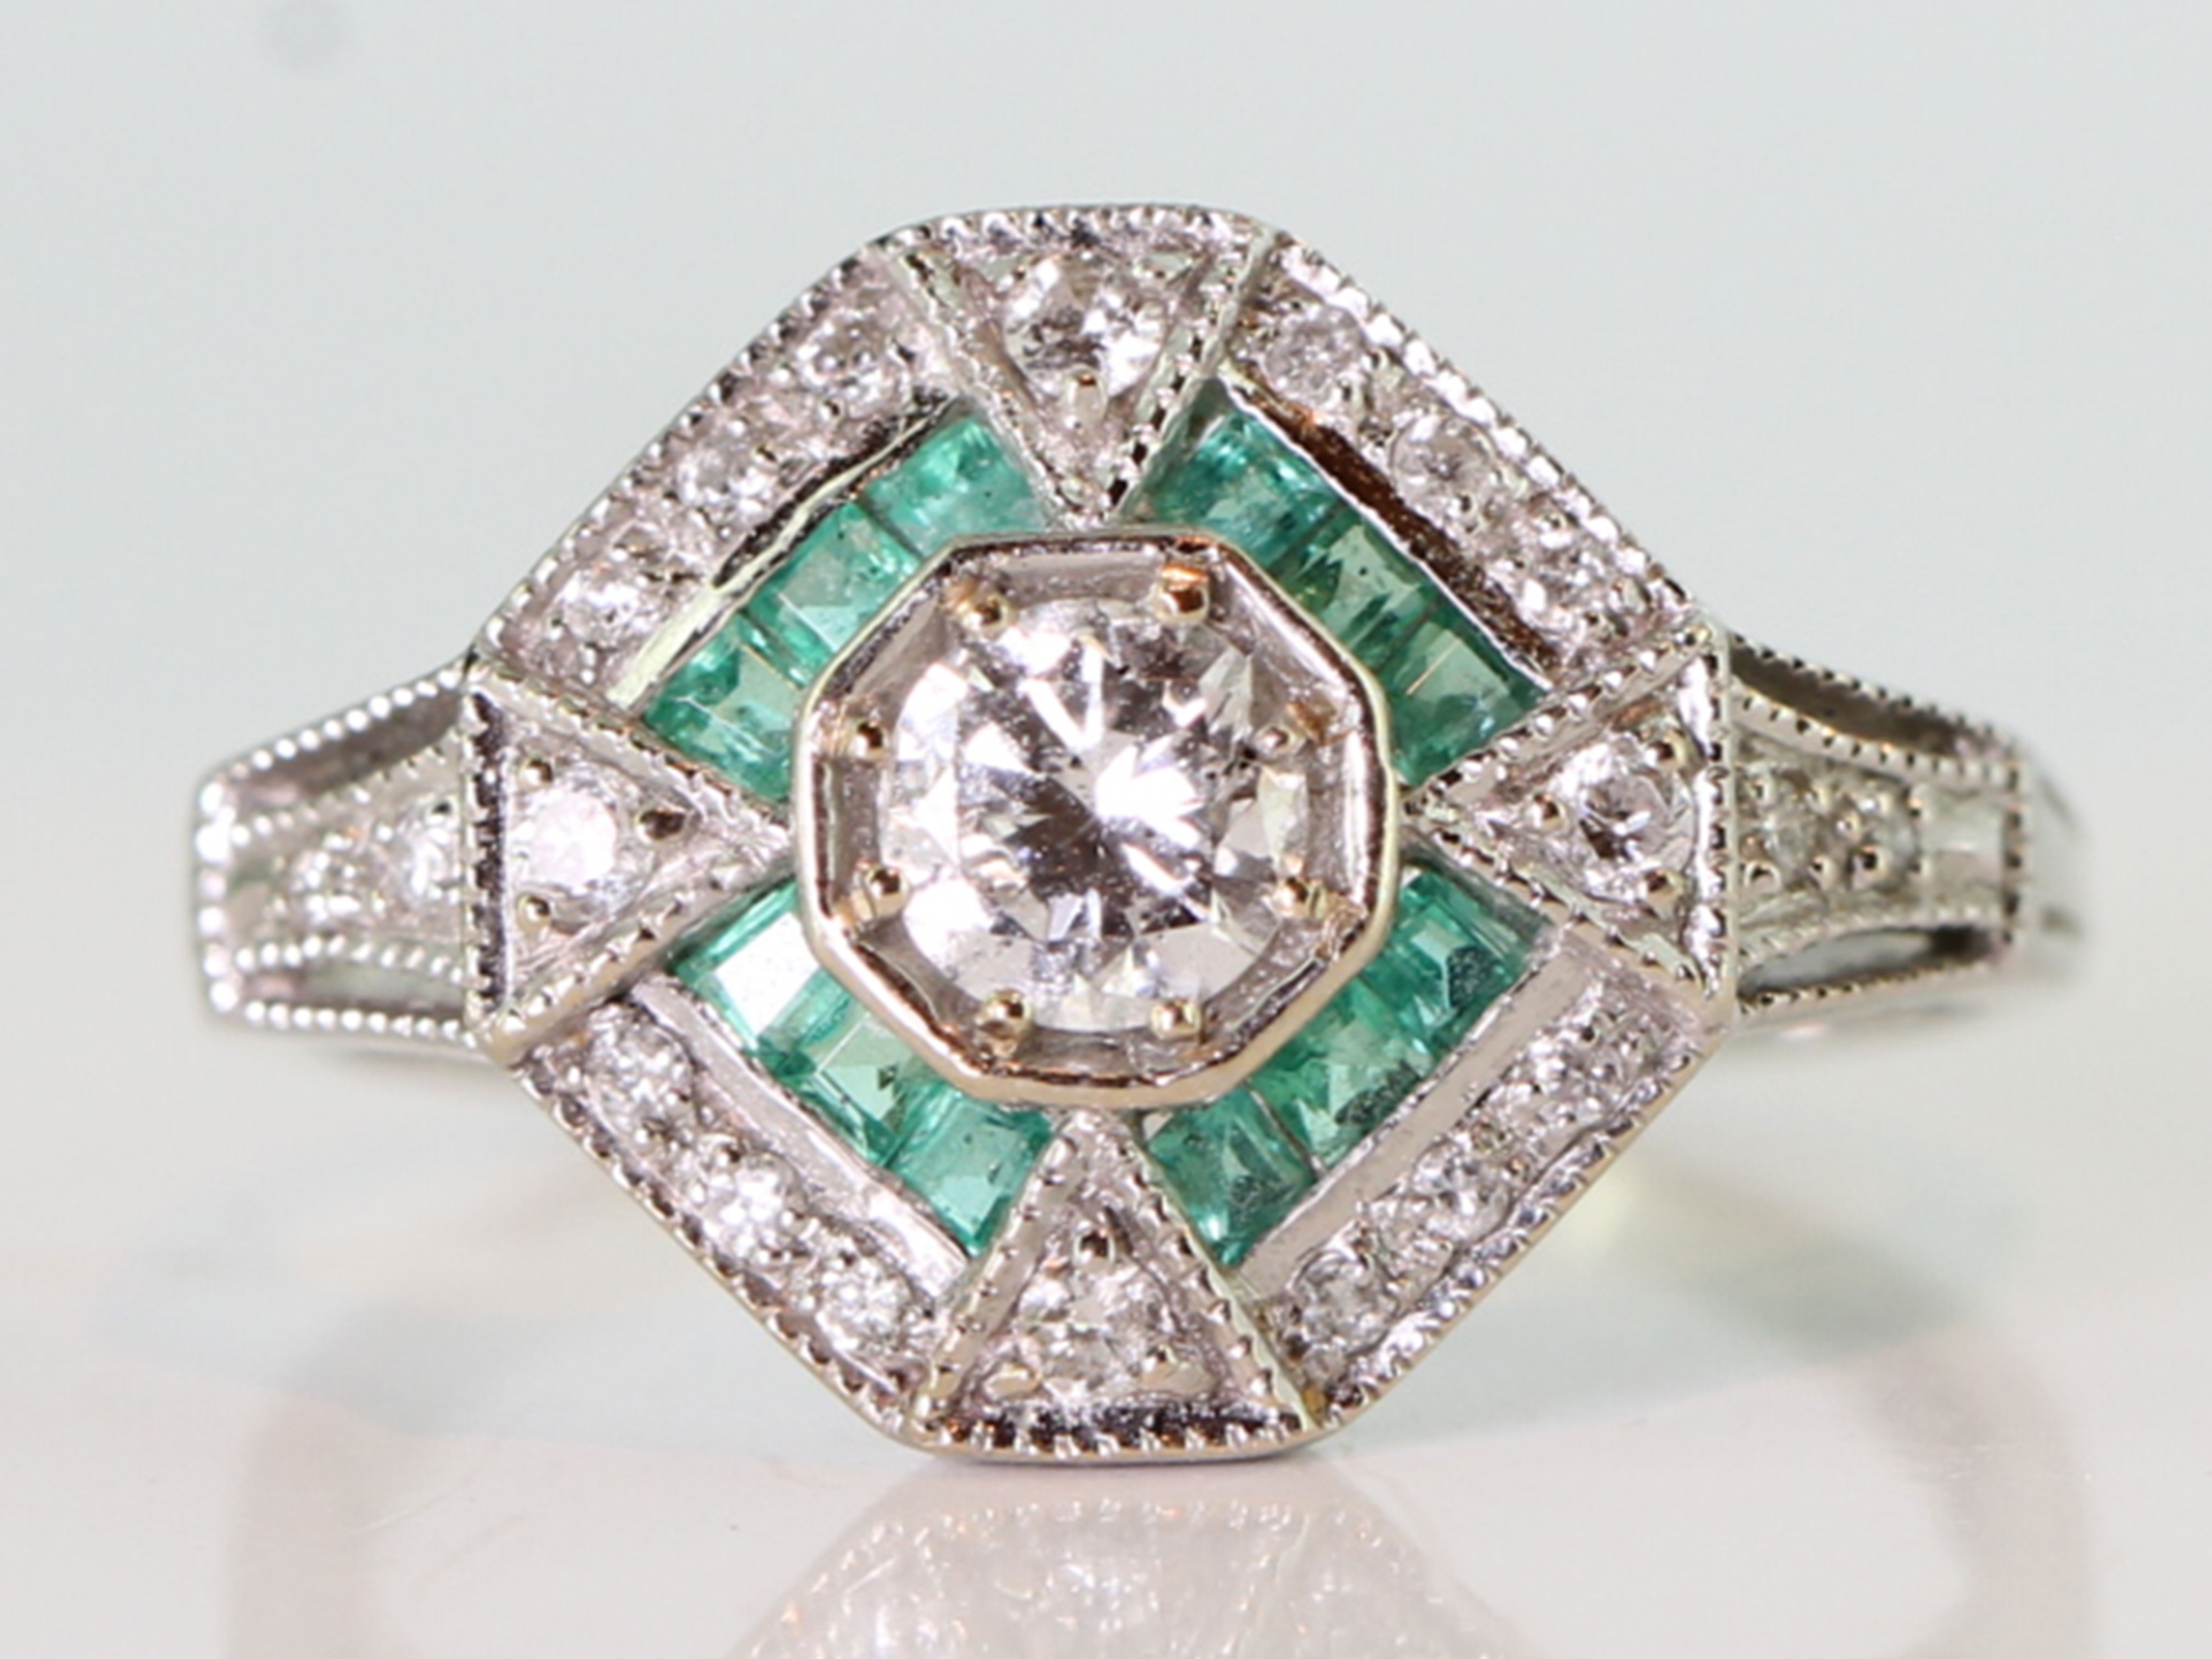 Stunning art deco inspired emerald and diamond 18 carat gold ring